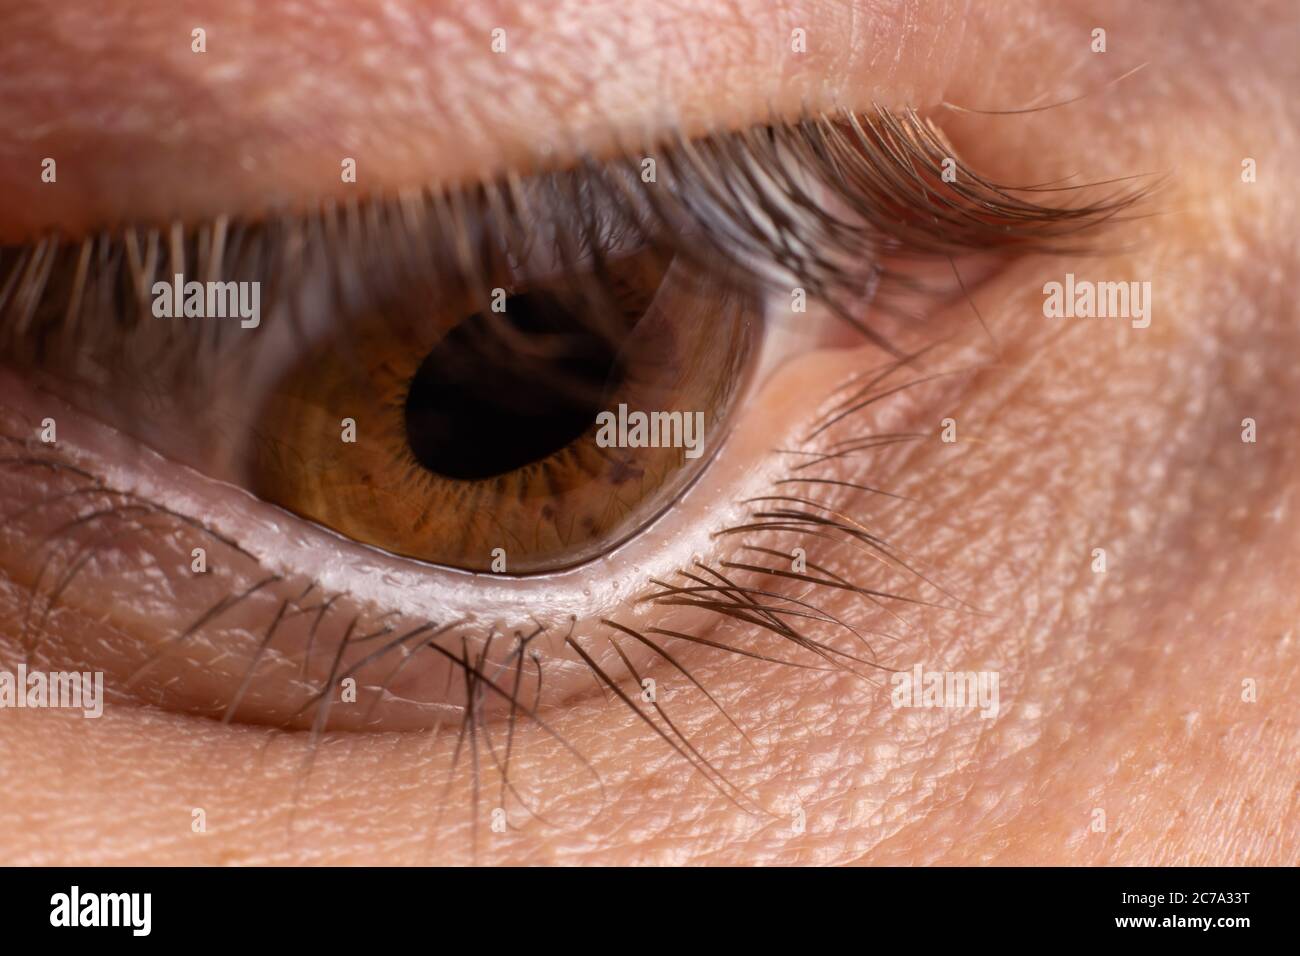 Macro eye photo. Keratoconus 4 degree - eye disease, thinning of the cornea in the form of a cone. The cornea plastic. Stock Photo